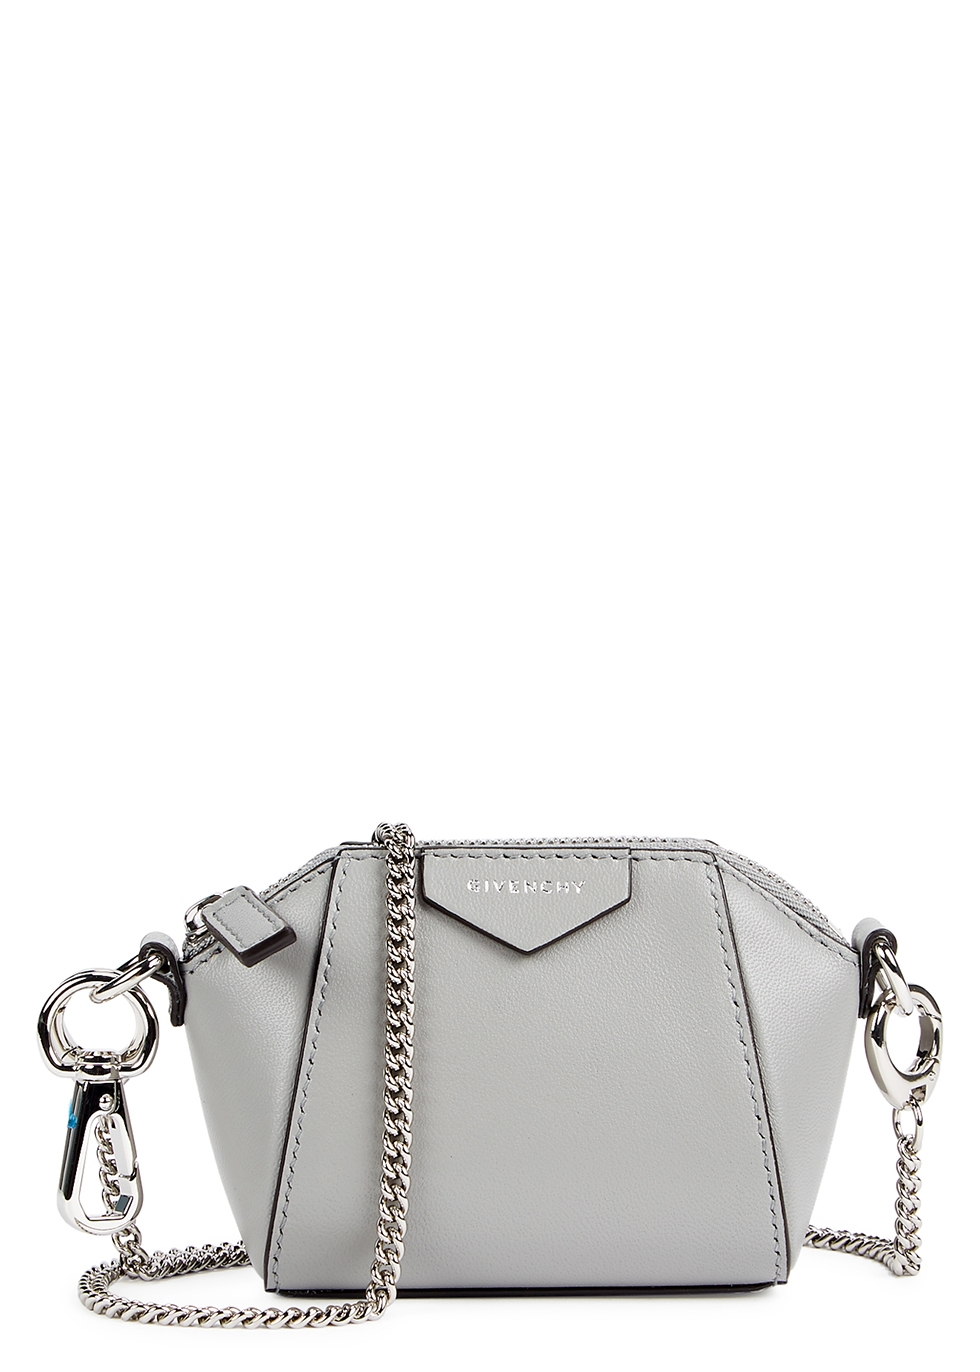 grey handbag